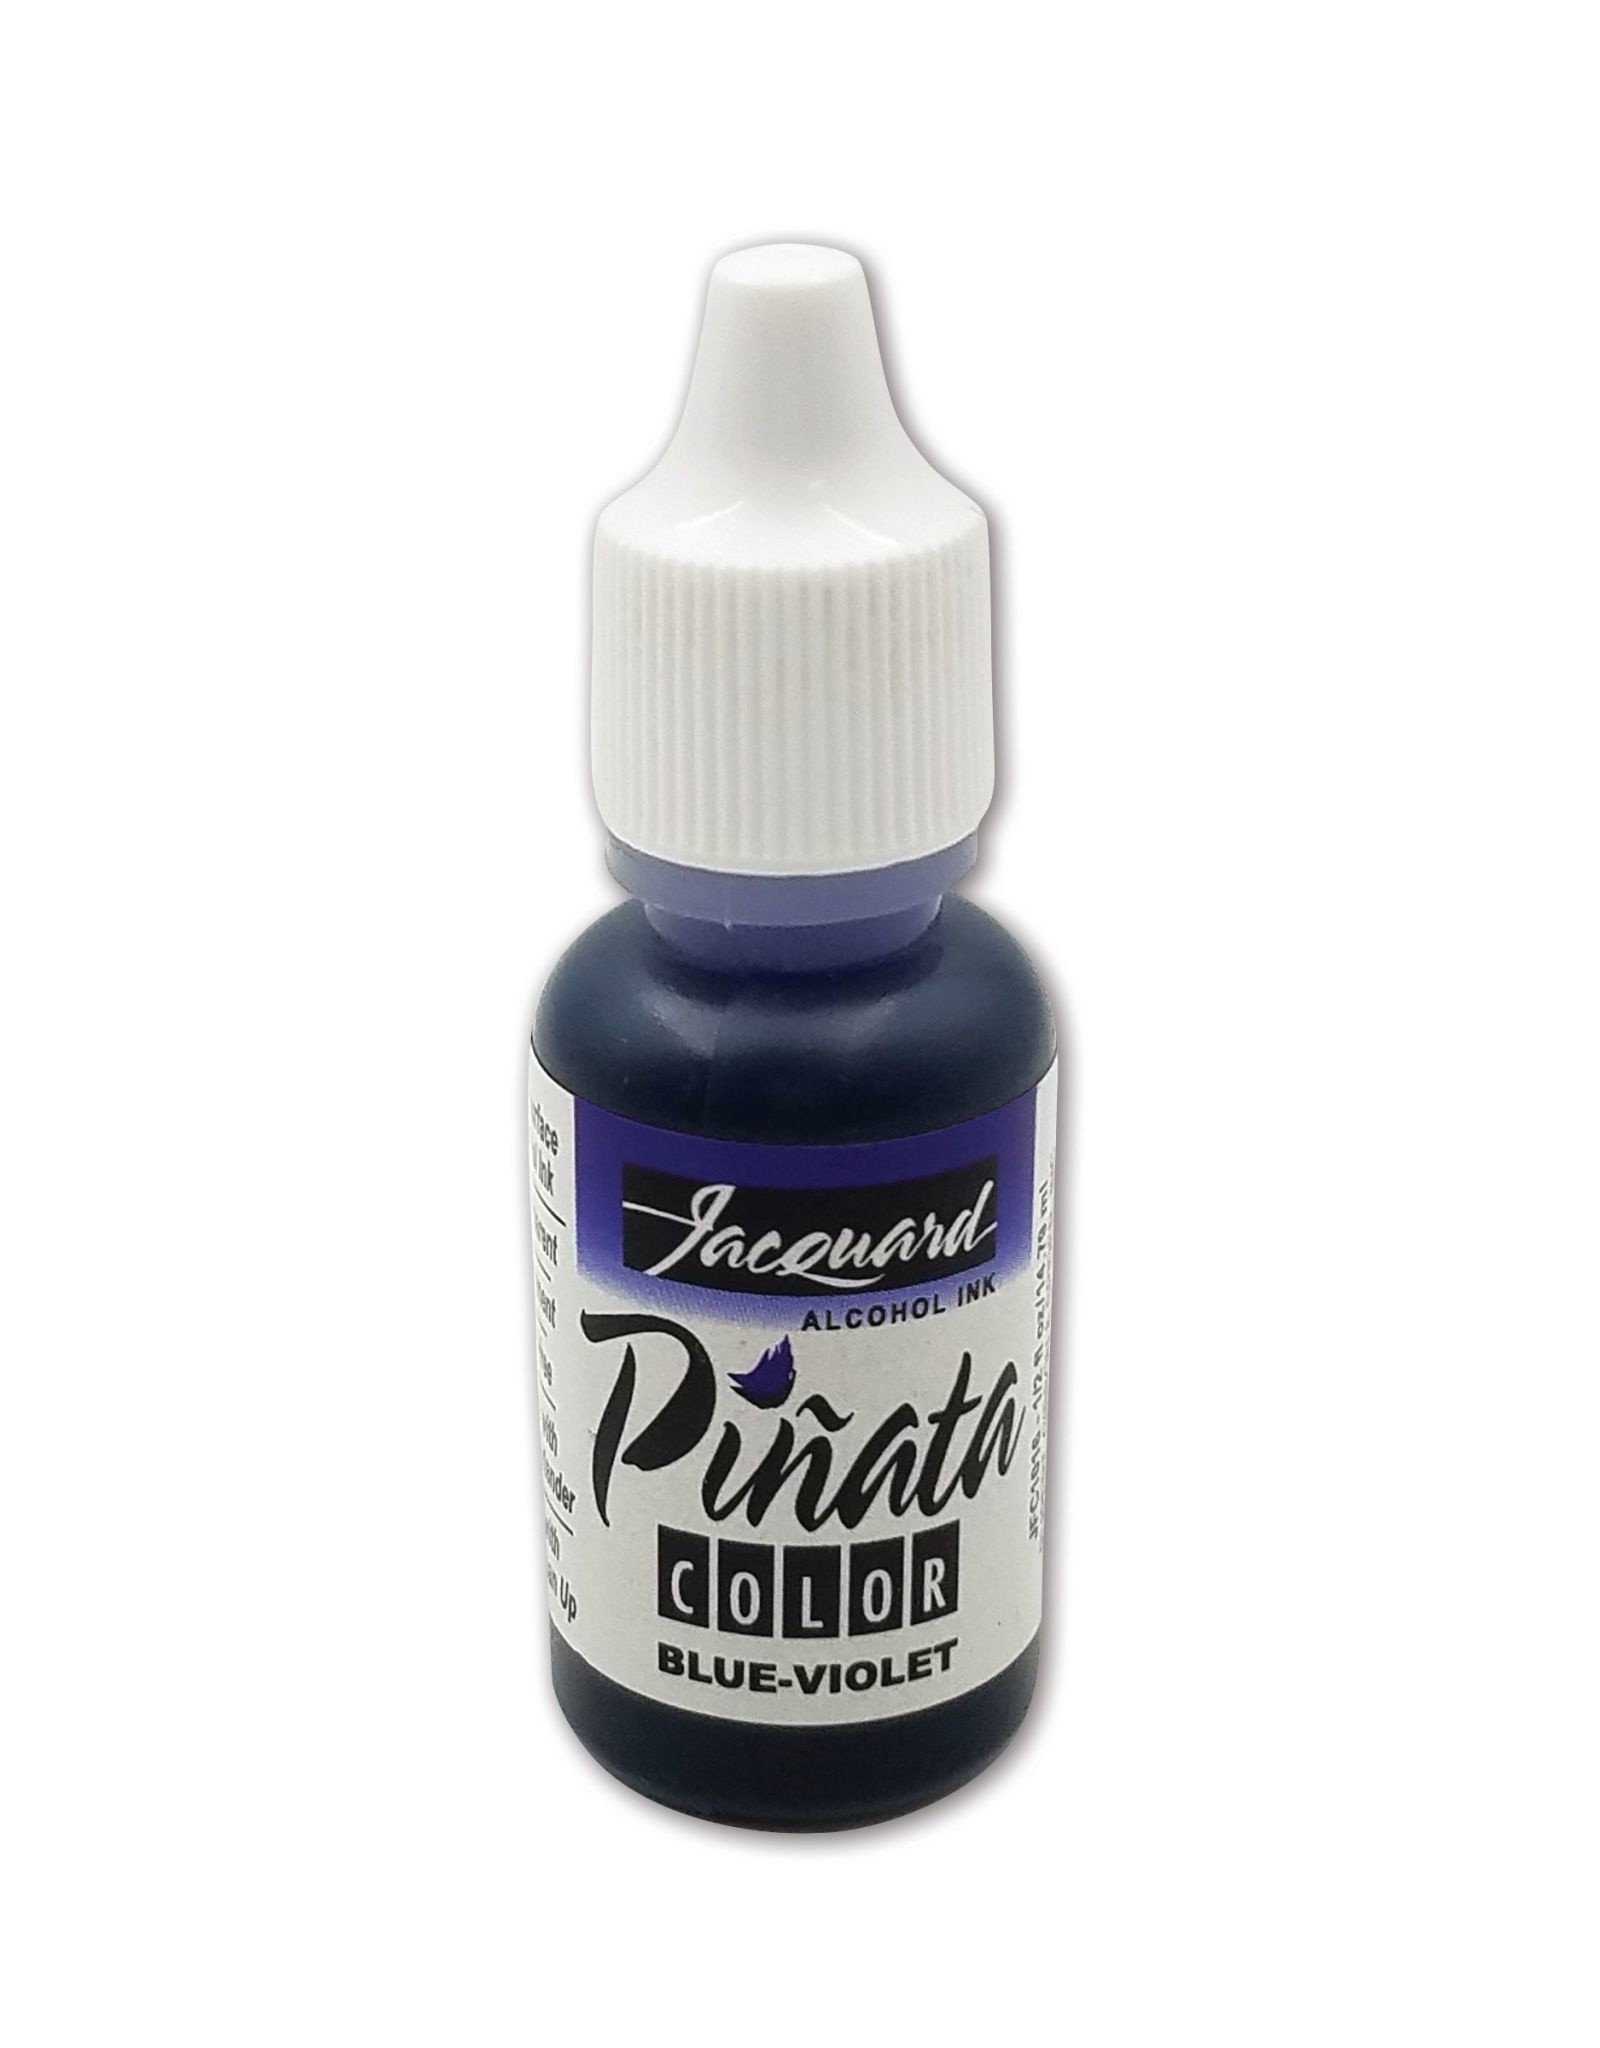 Jacquard Jacquard Pinata Alcohol Ink #016 Blue Violet .5oz